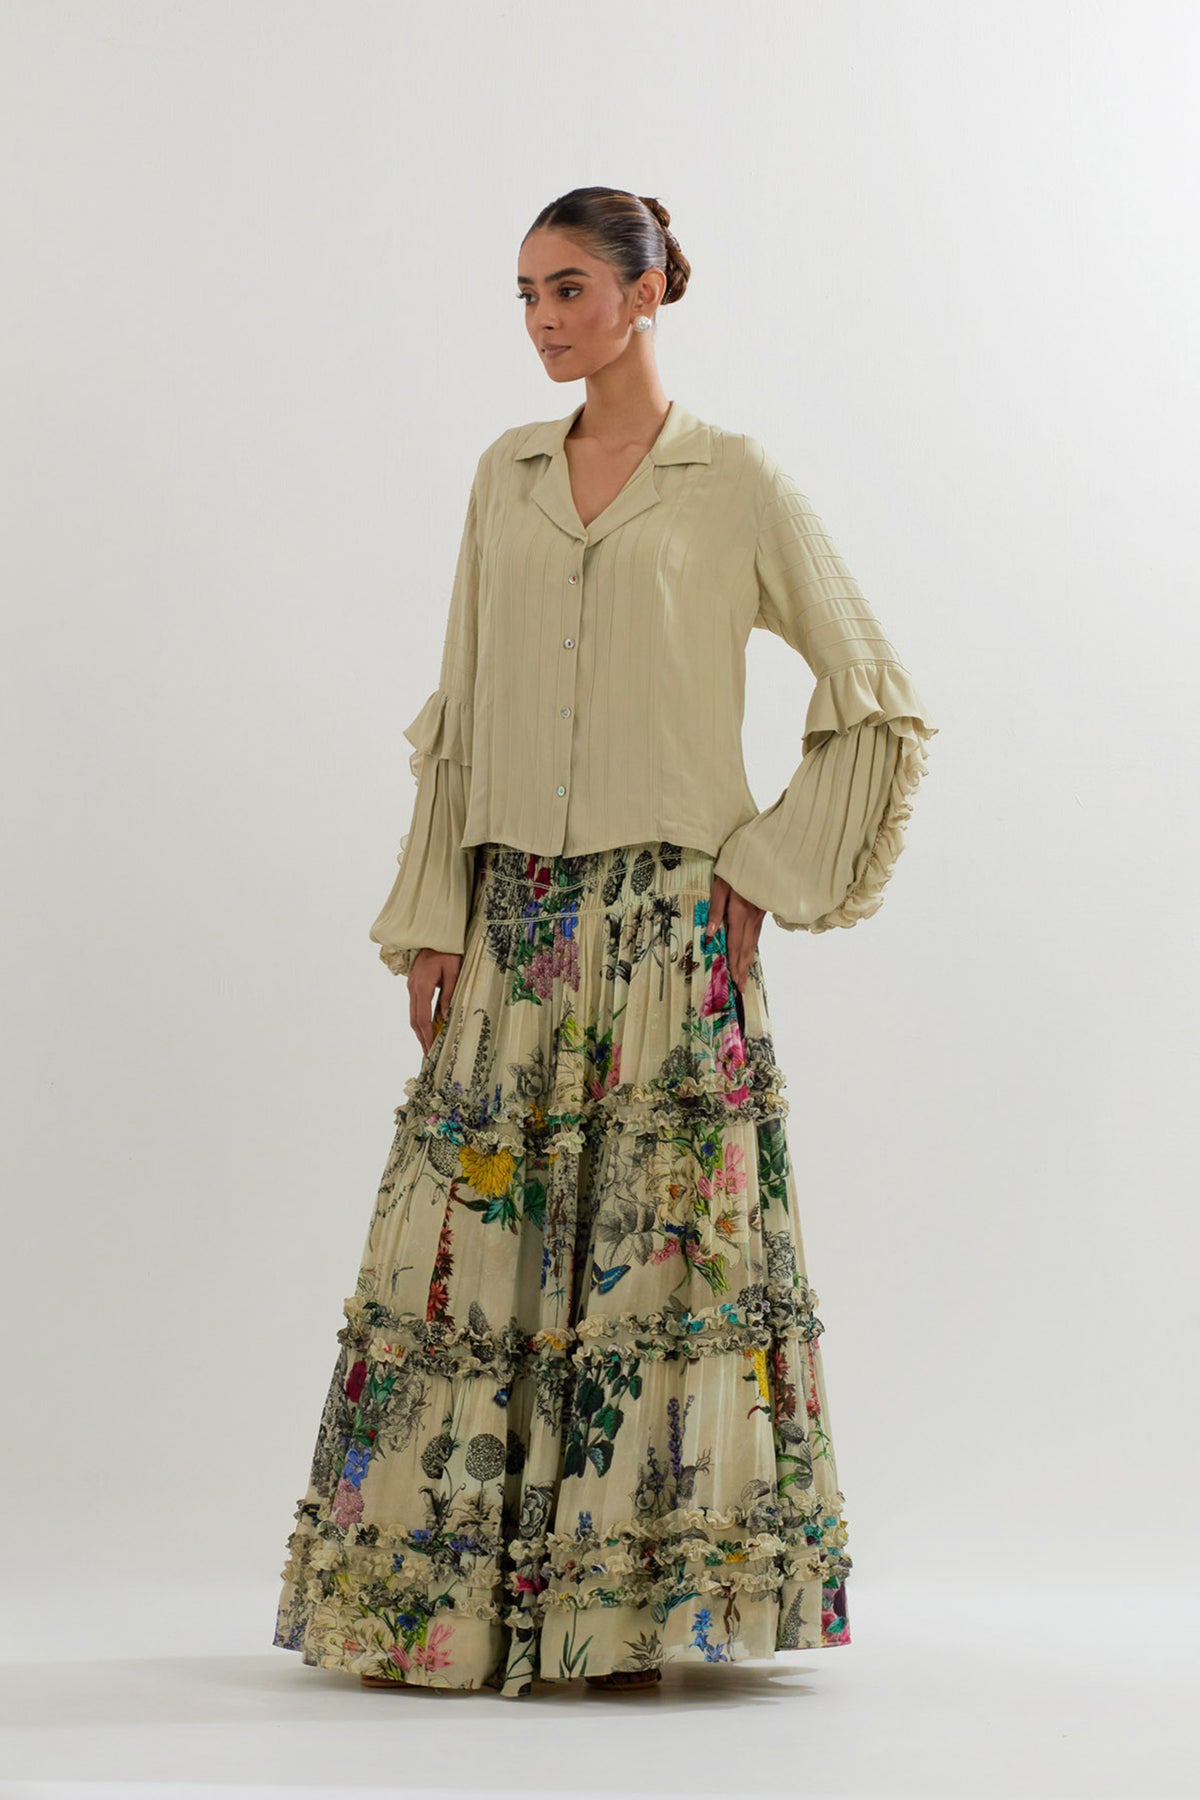 Botanical Printed Skirt With Ruffle Shirt